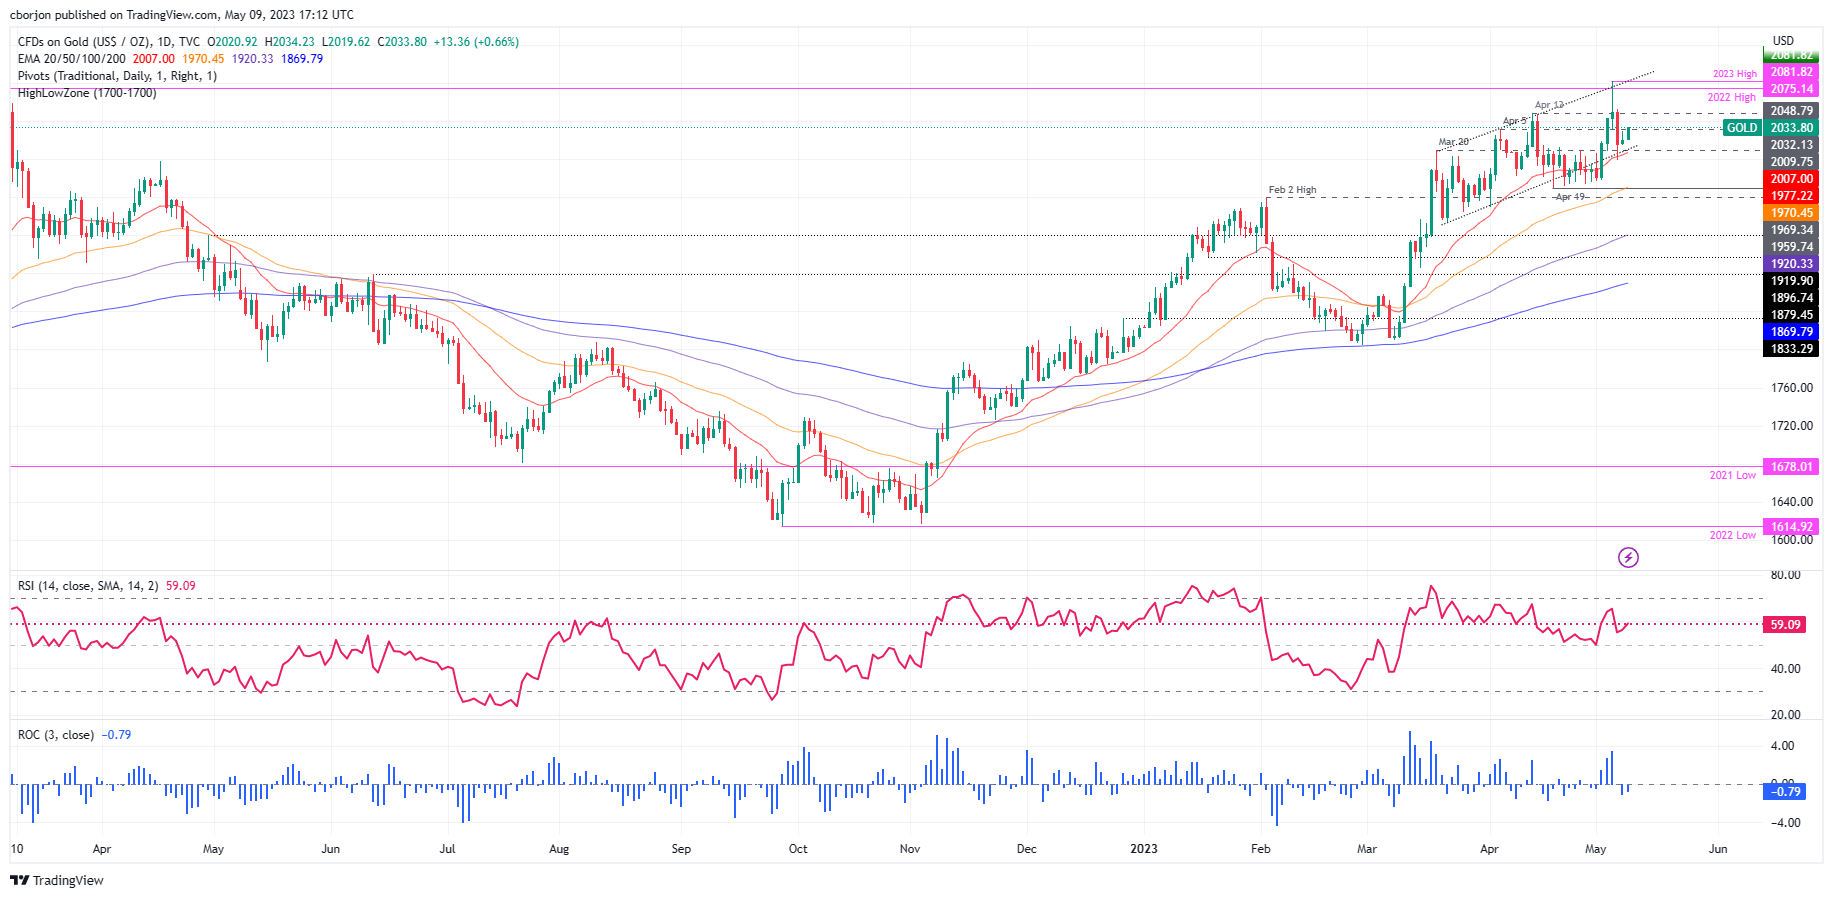 XAU/USD Daily chart